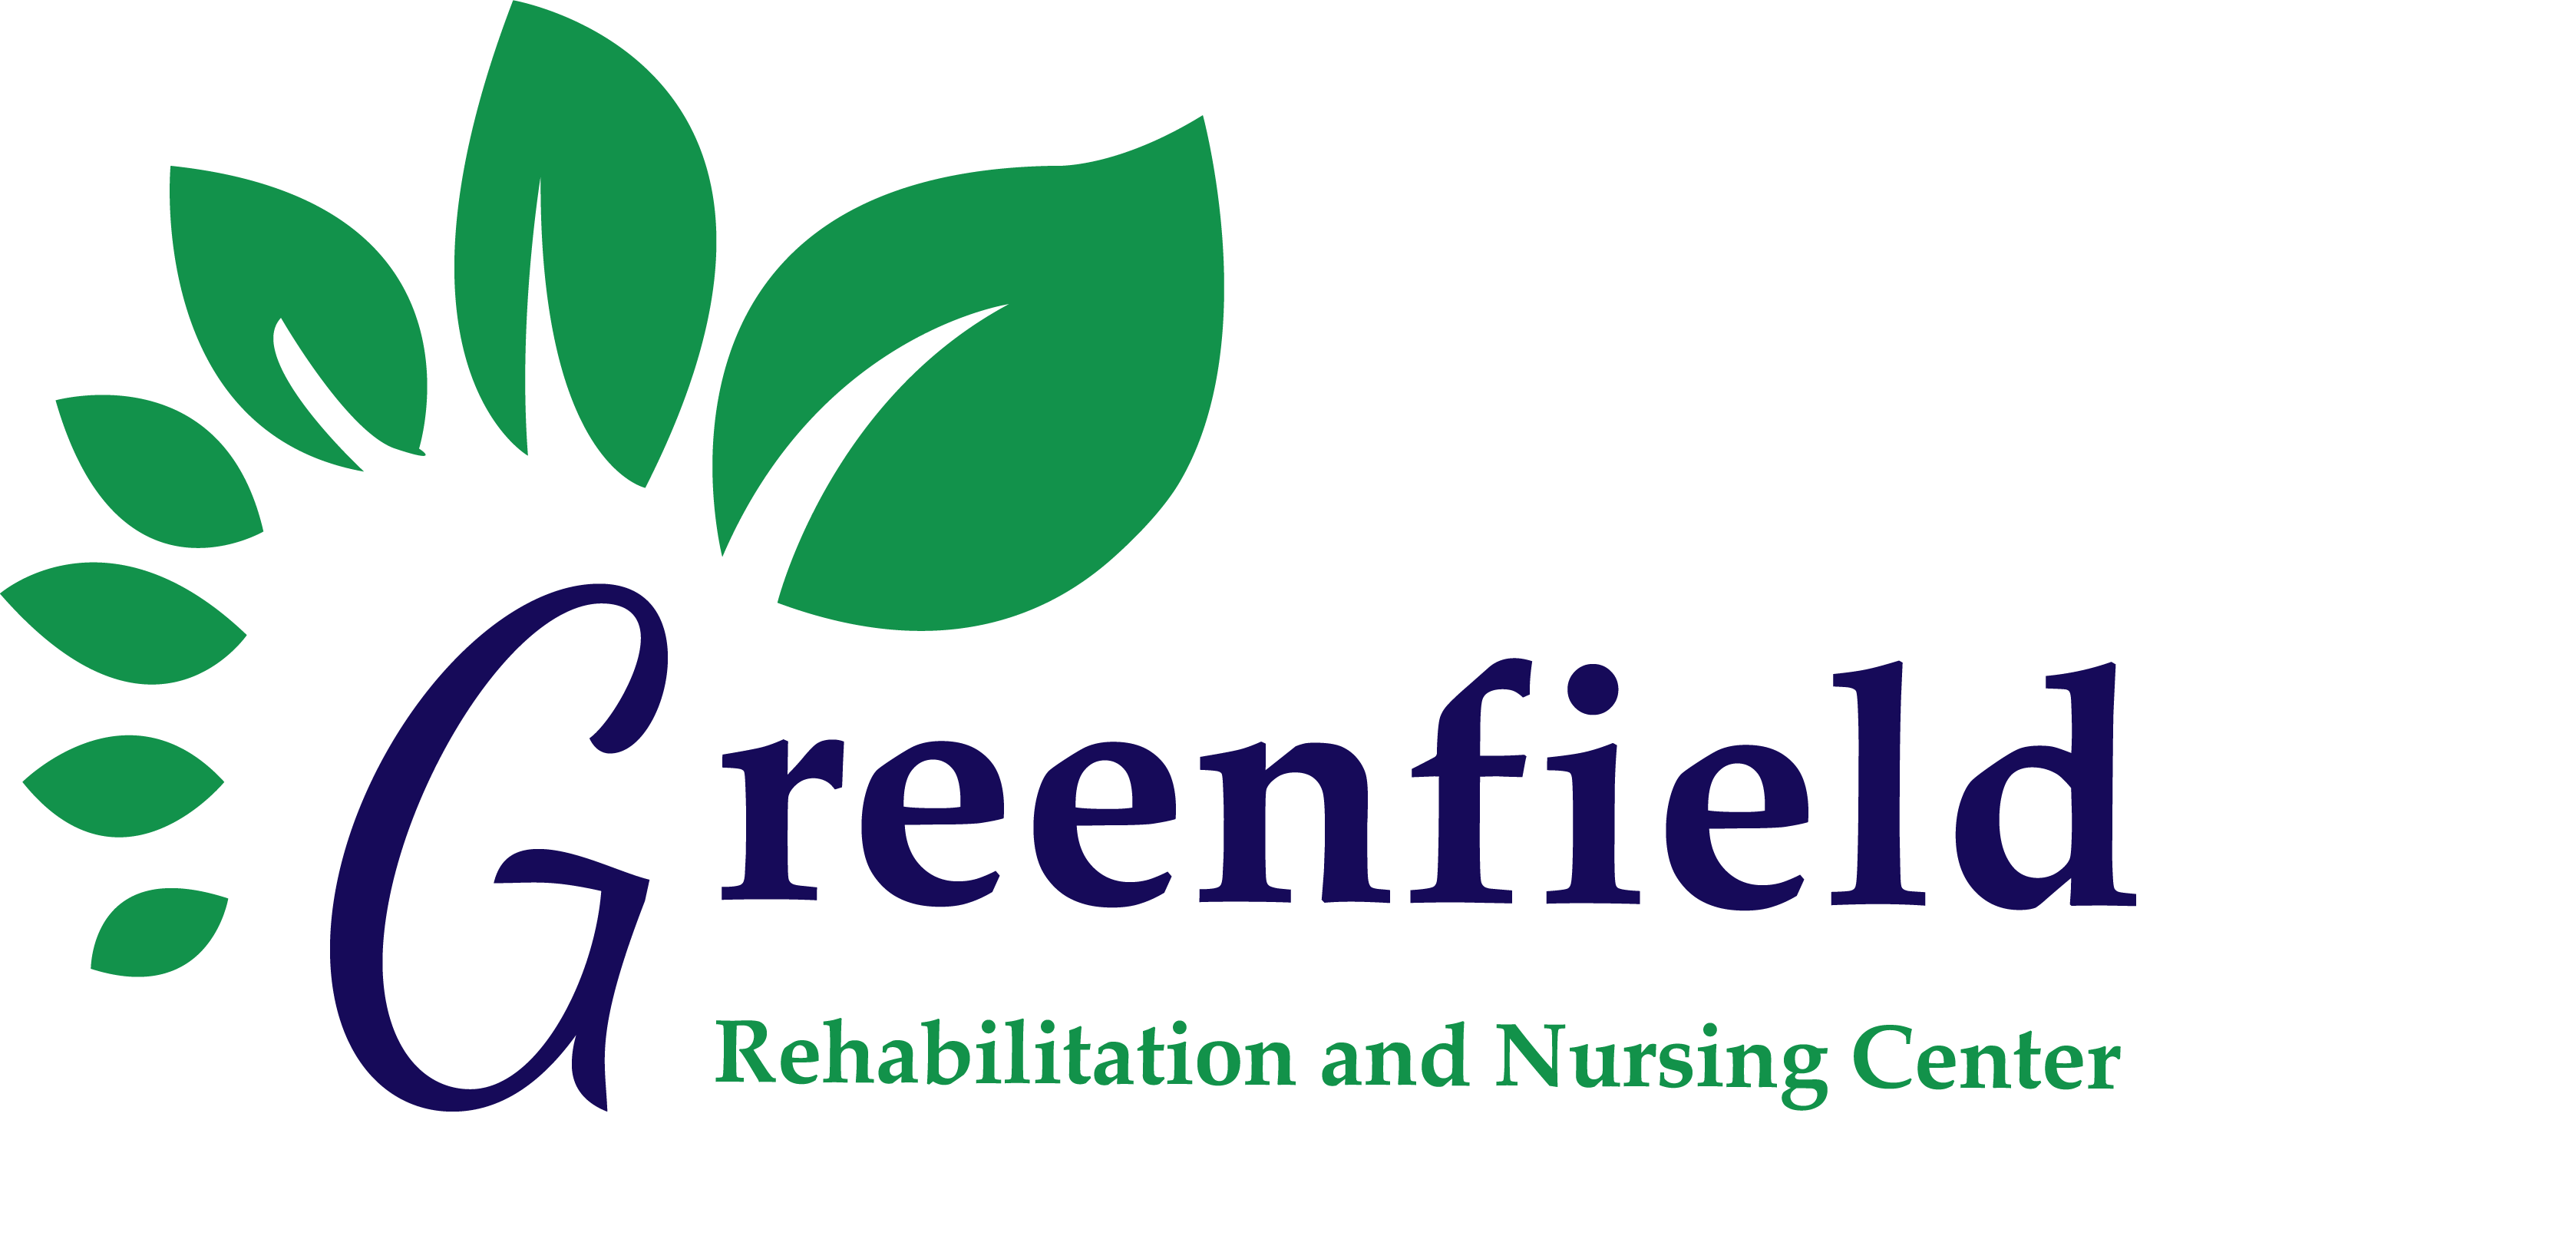 Greenfield Rehabilitation and Nursing Center